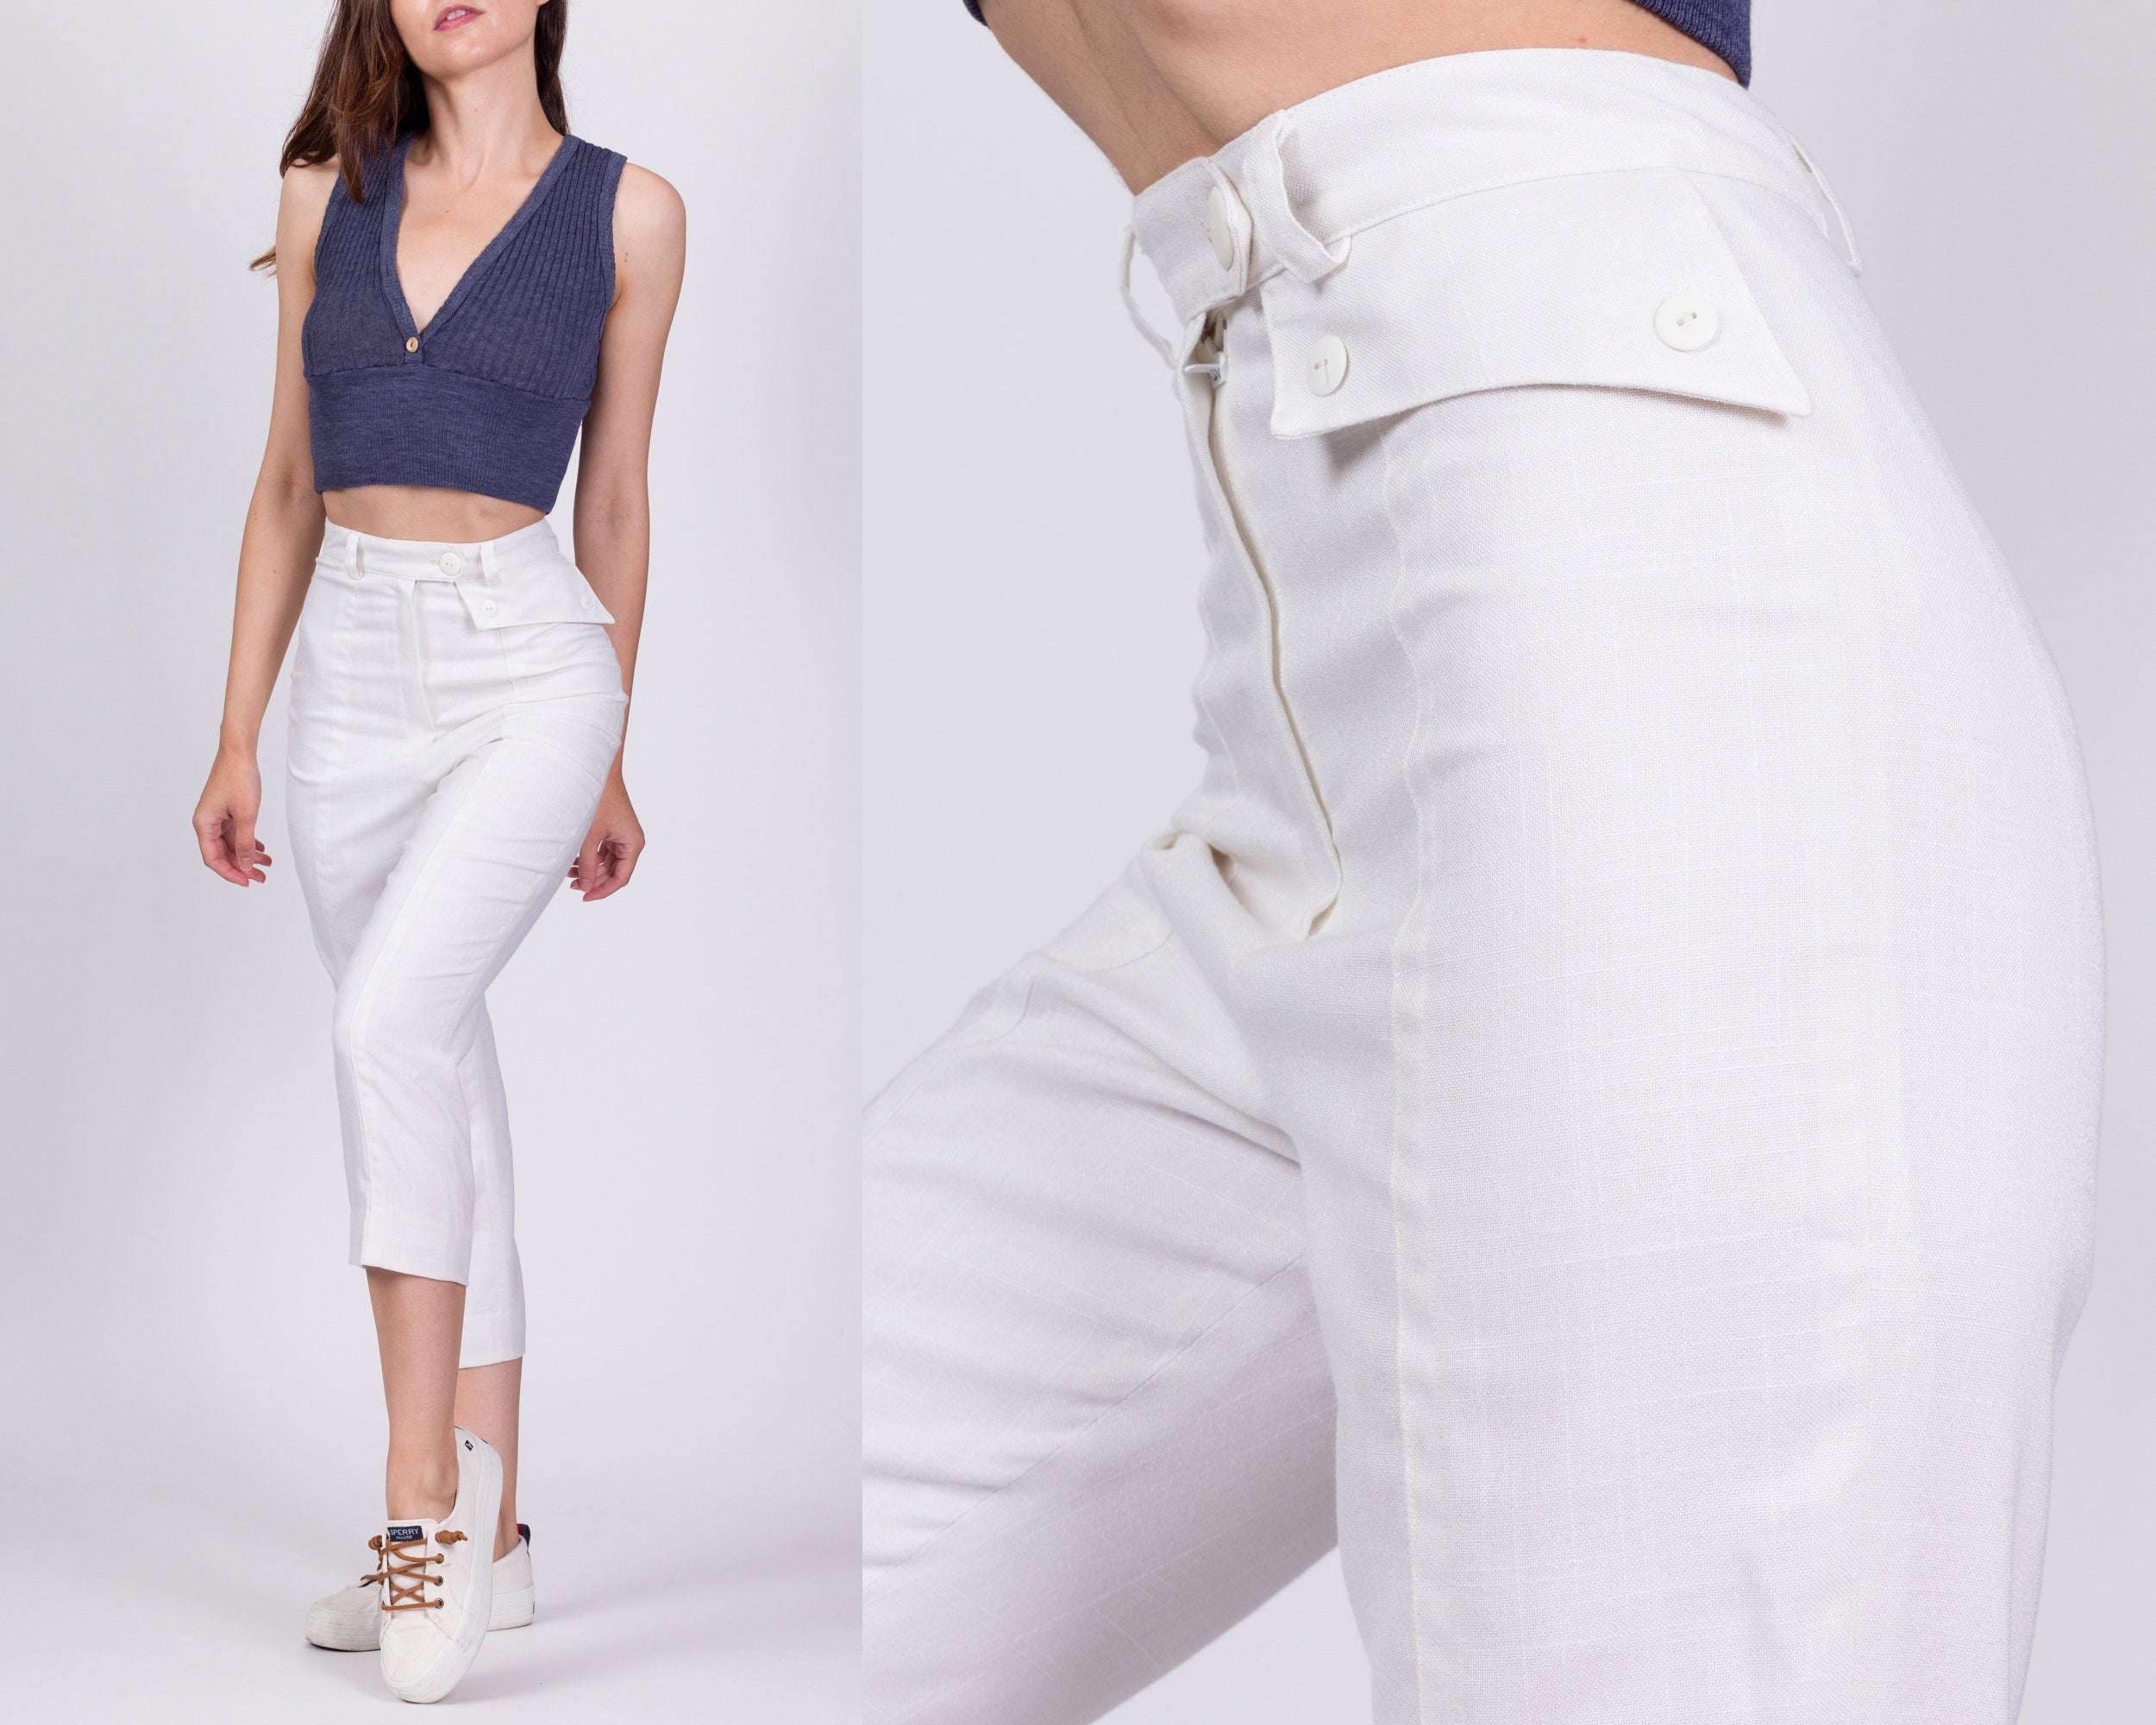 Straight Leg Jeans, White – Spanx